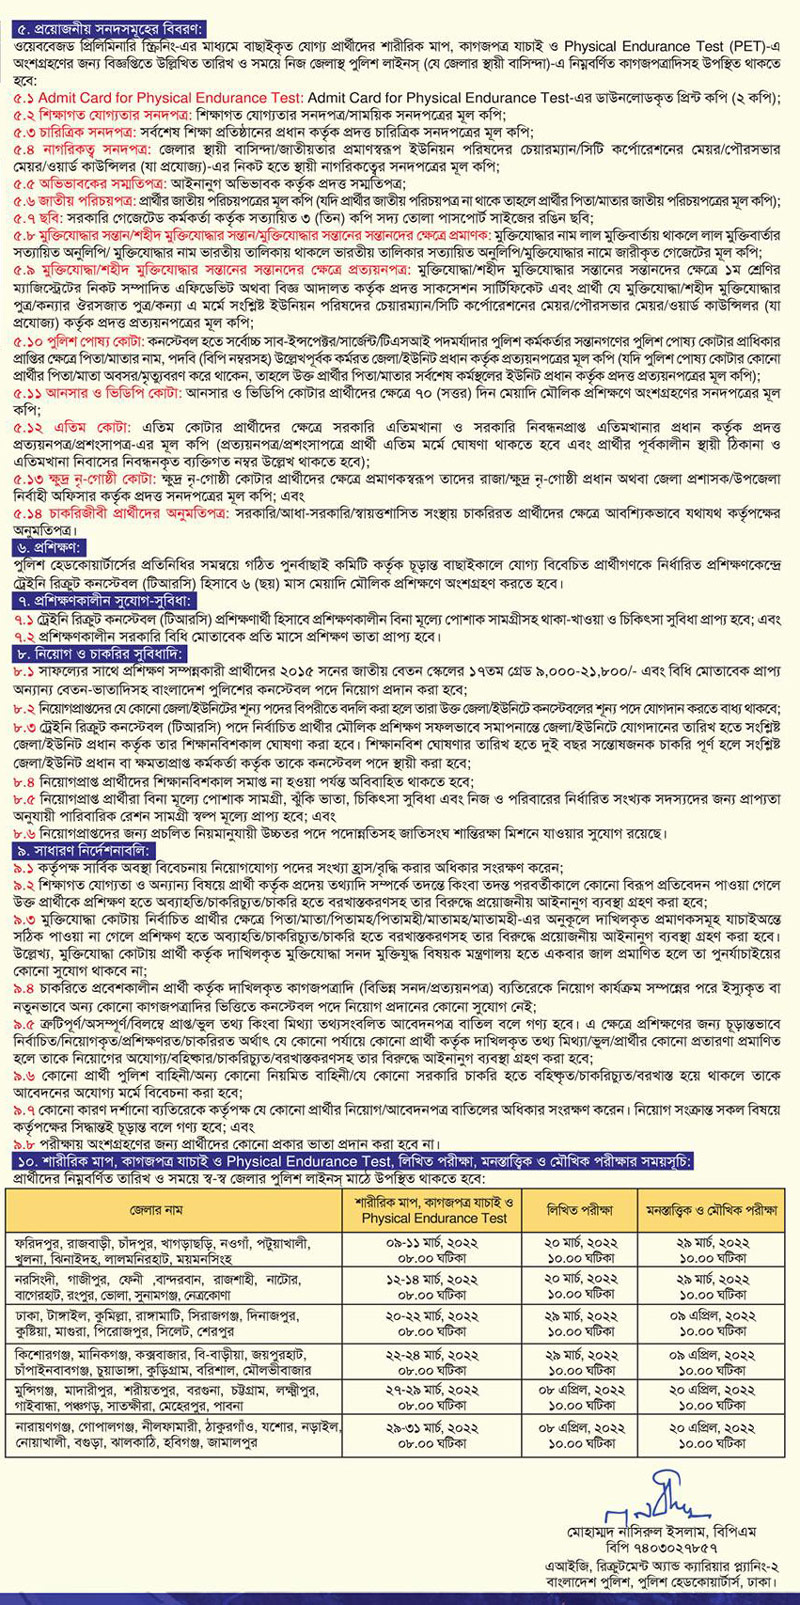 bangladesh police job circular